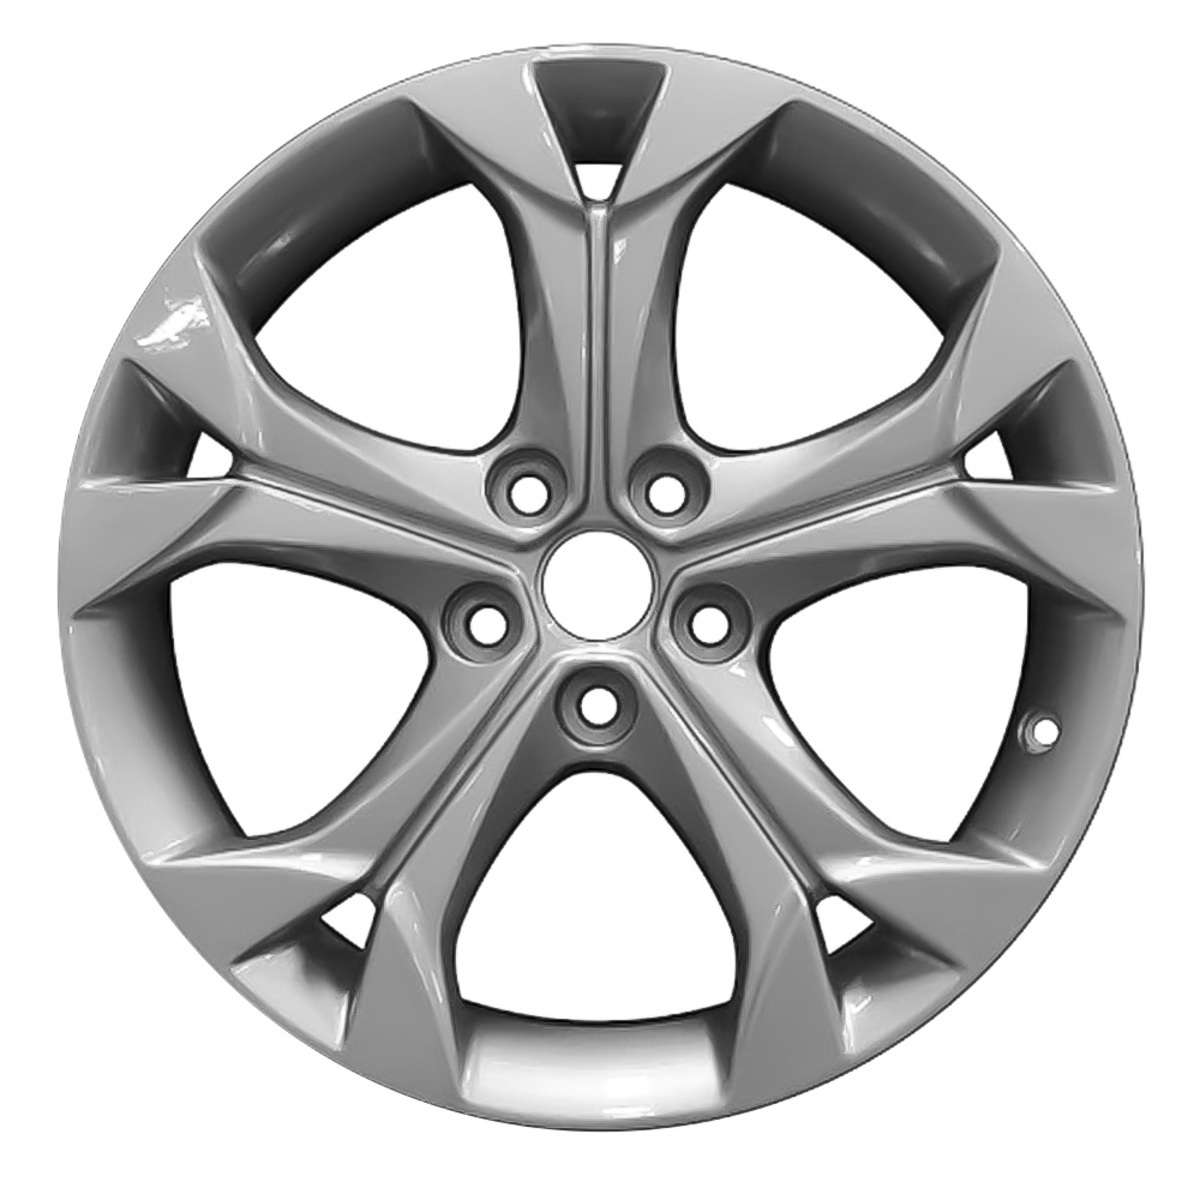 2018 Chevrolet Cruze 17" OEM Wheel Rim W5749S